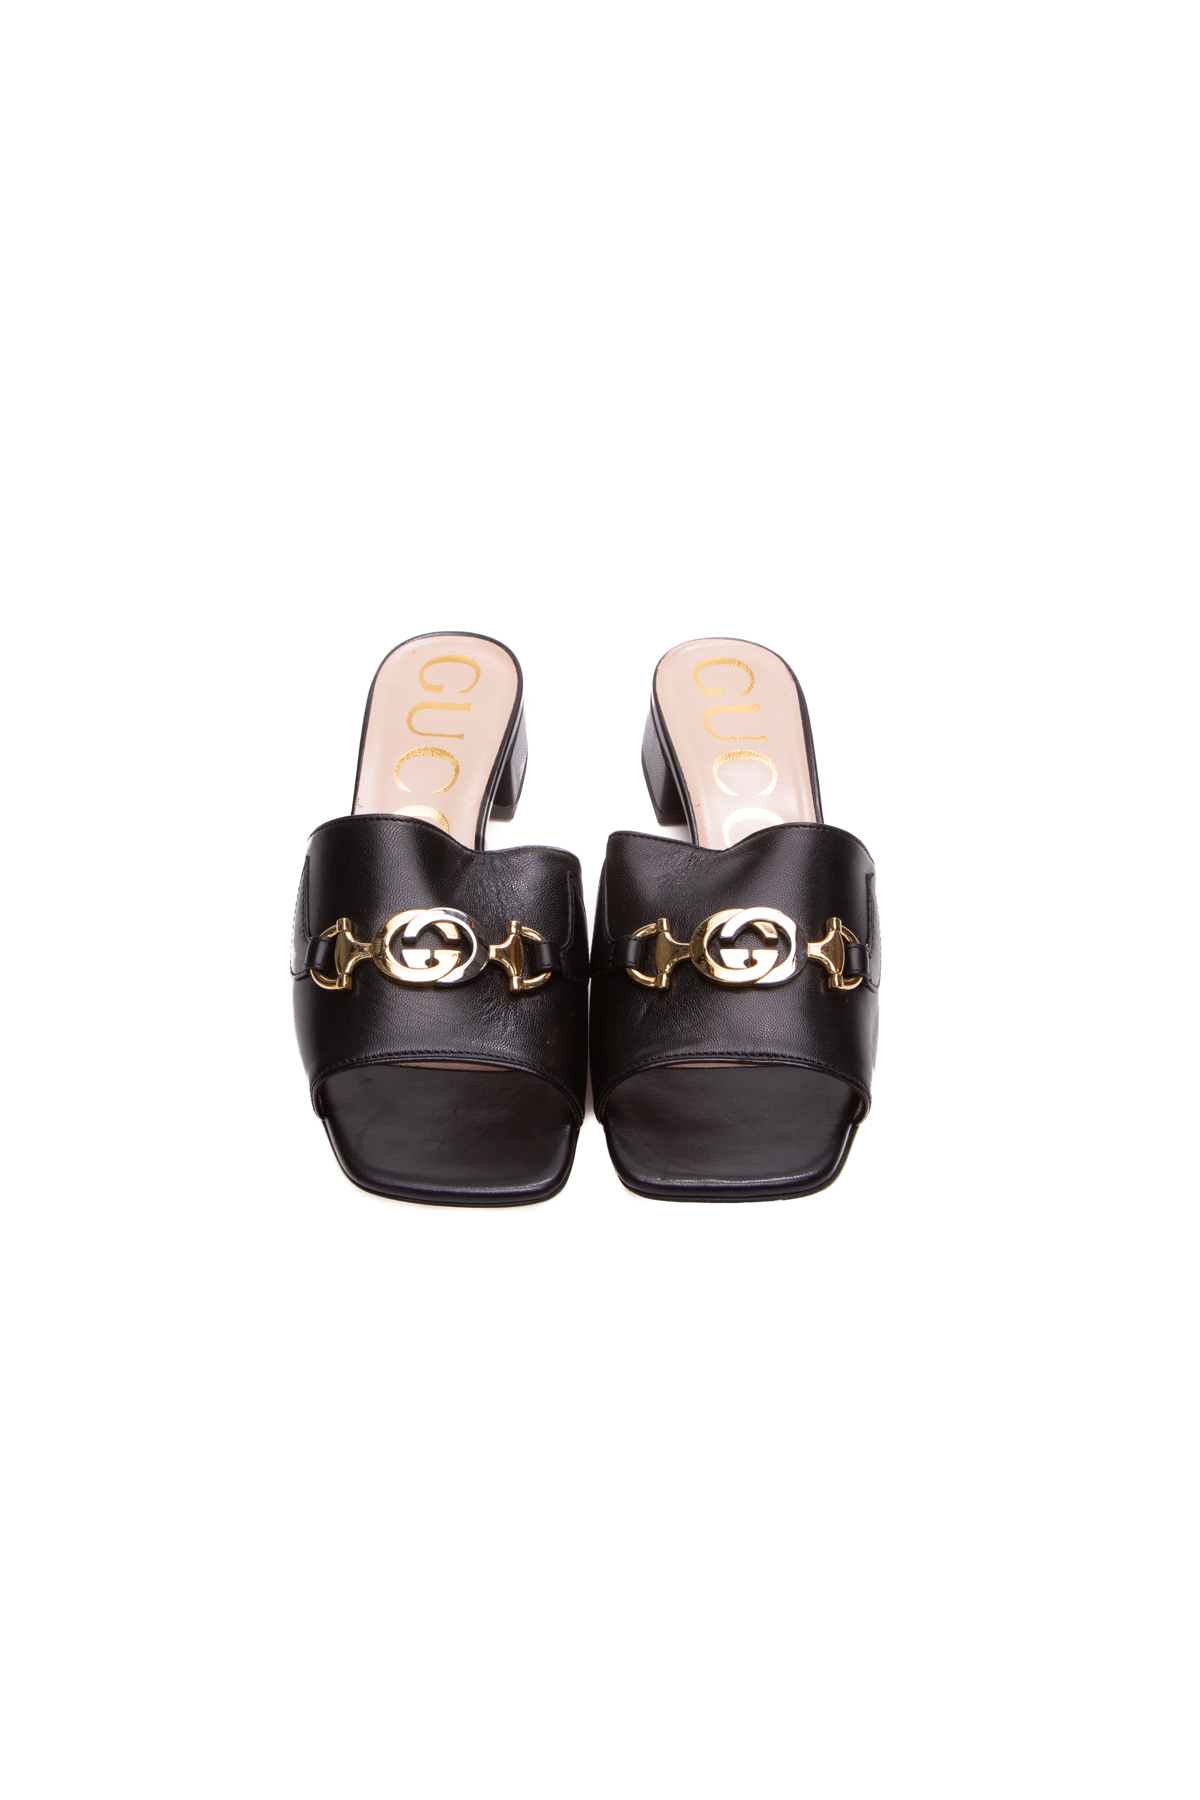 Gucci Black Zumi Slide Sandals - Size 35.5